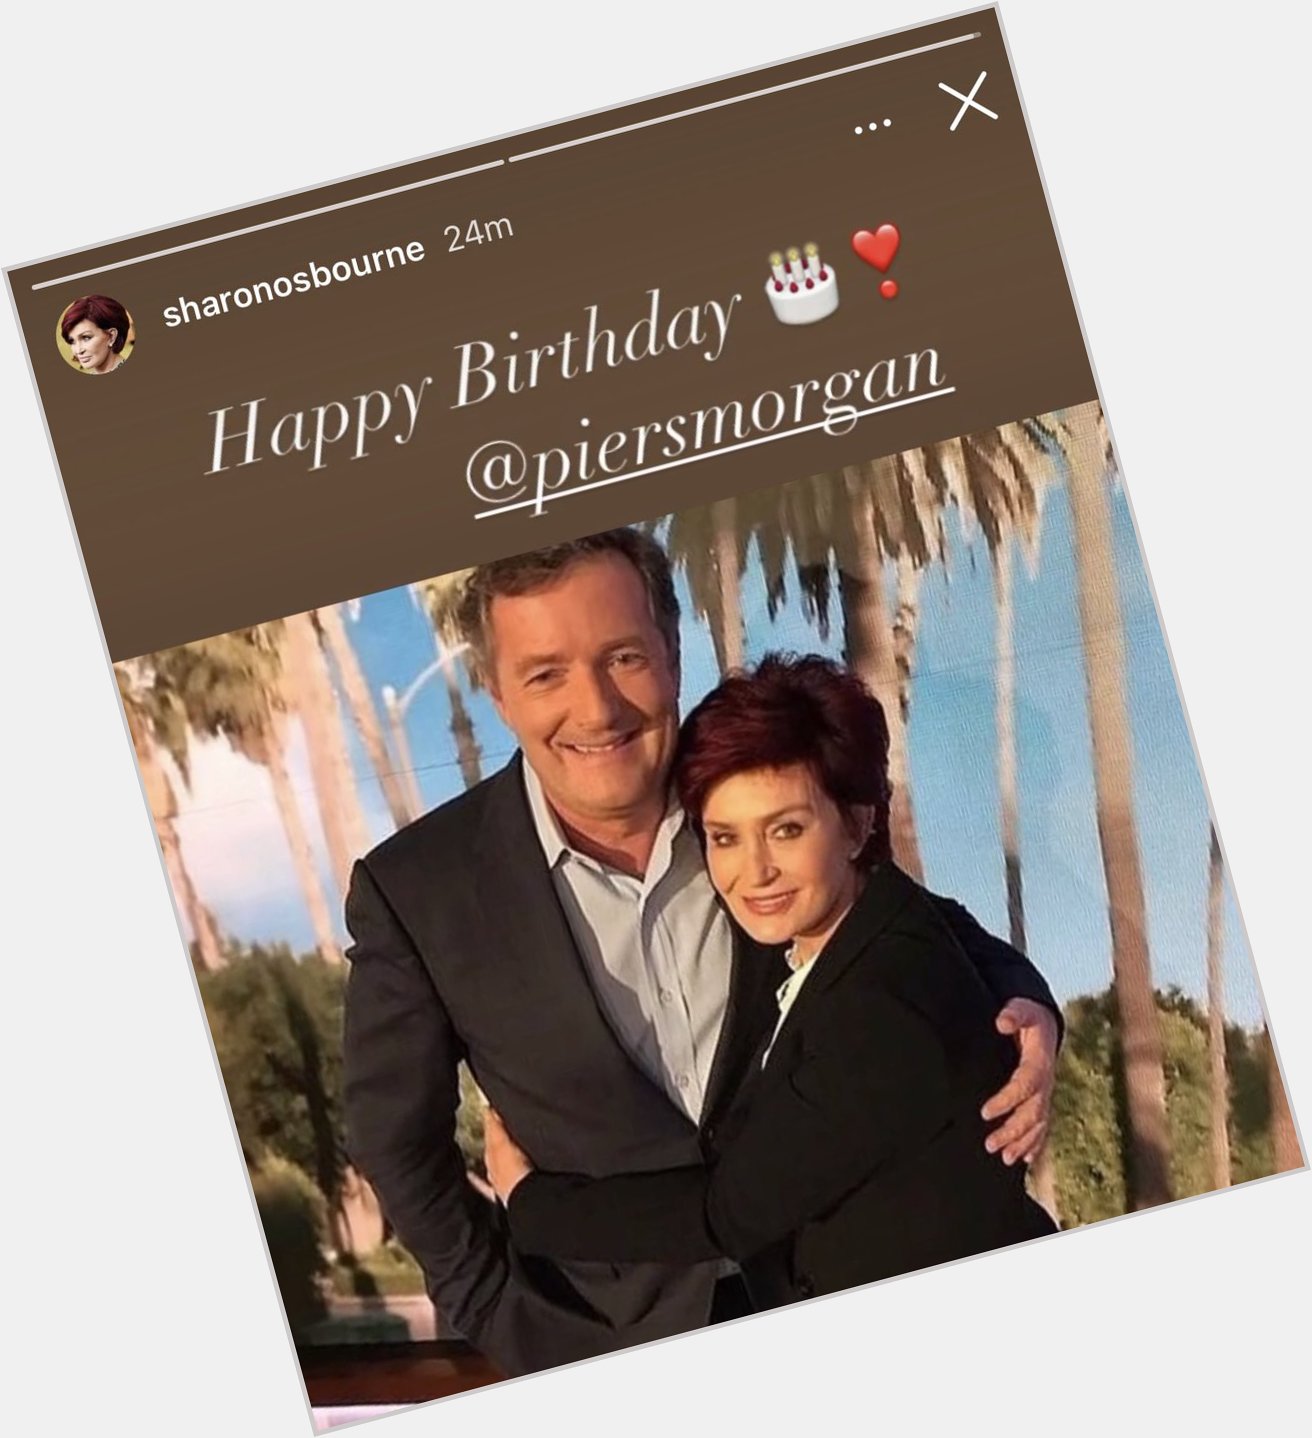 Sharon Osbourne wishes Piers Morgan a Happy Birthday on her Instagram. 